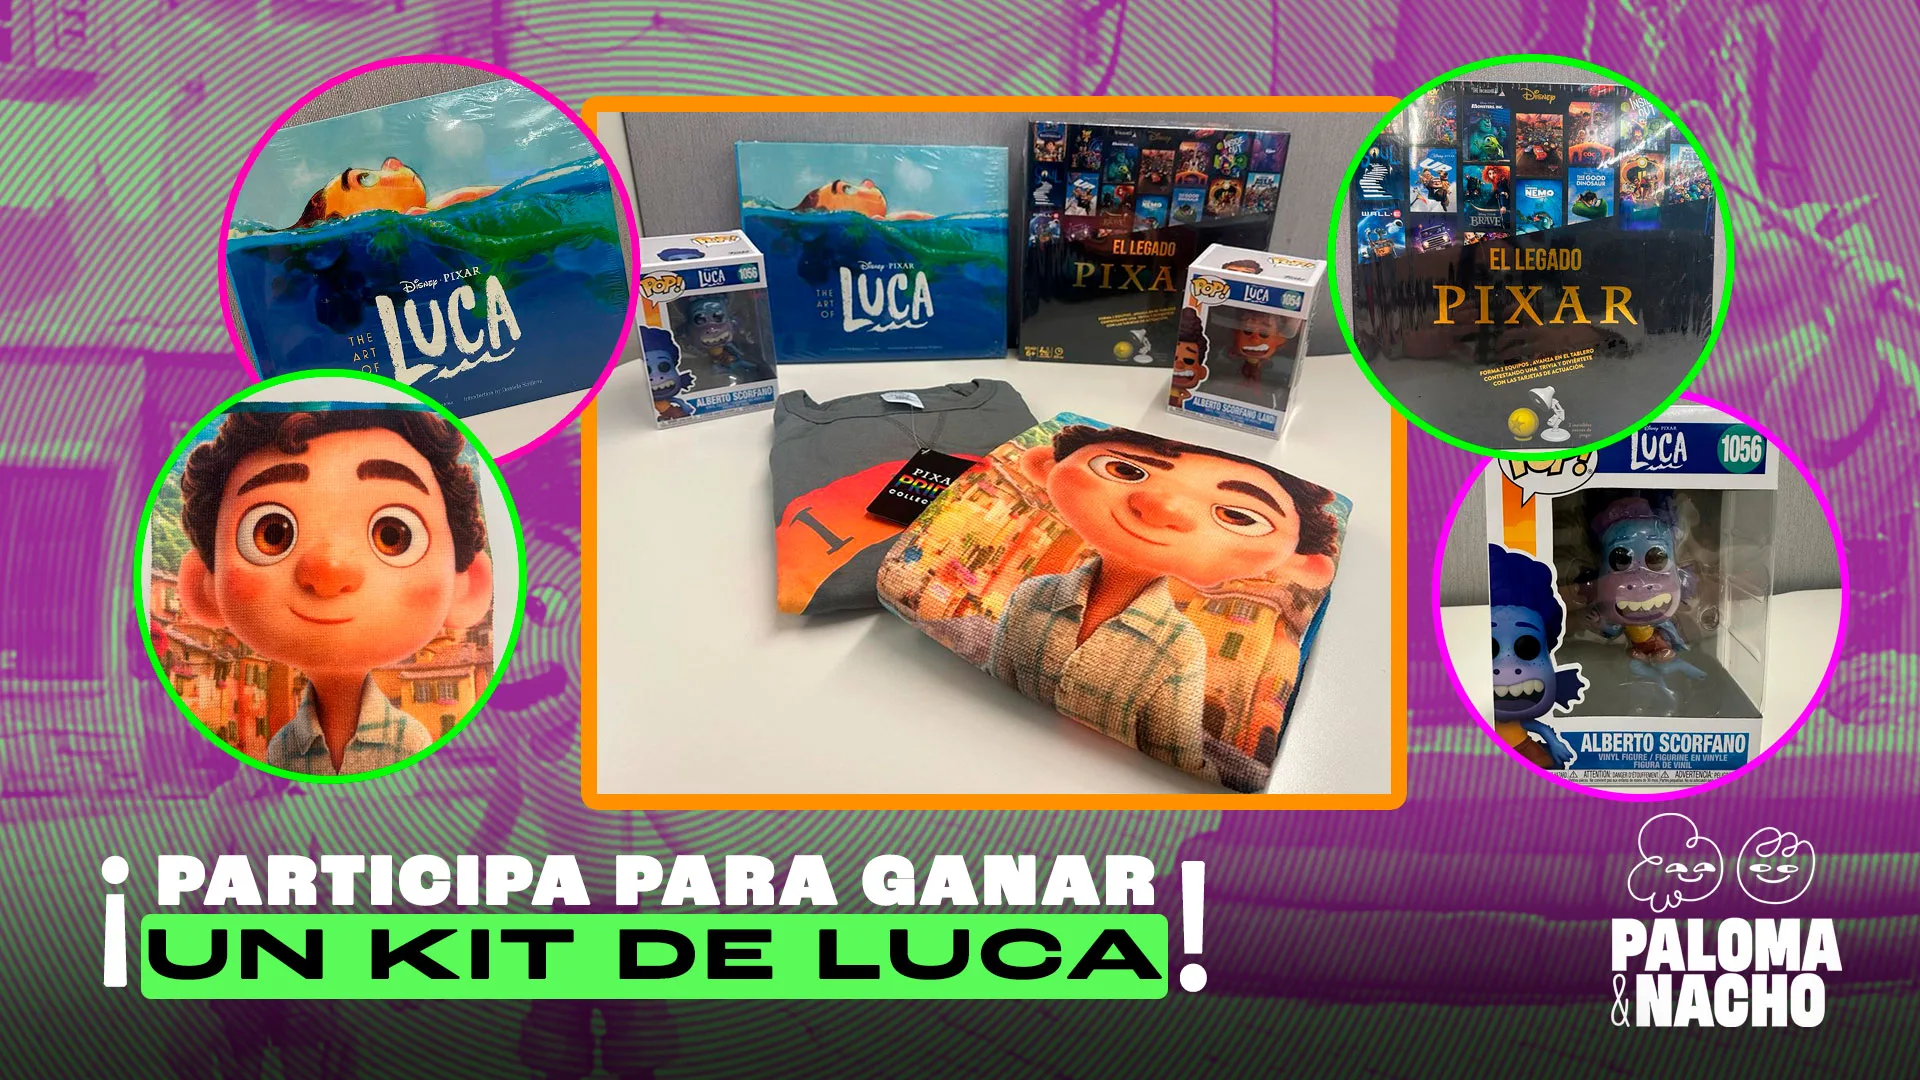 Gana un kit de Luca, de Disney Pixar